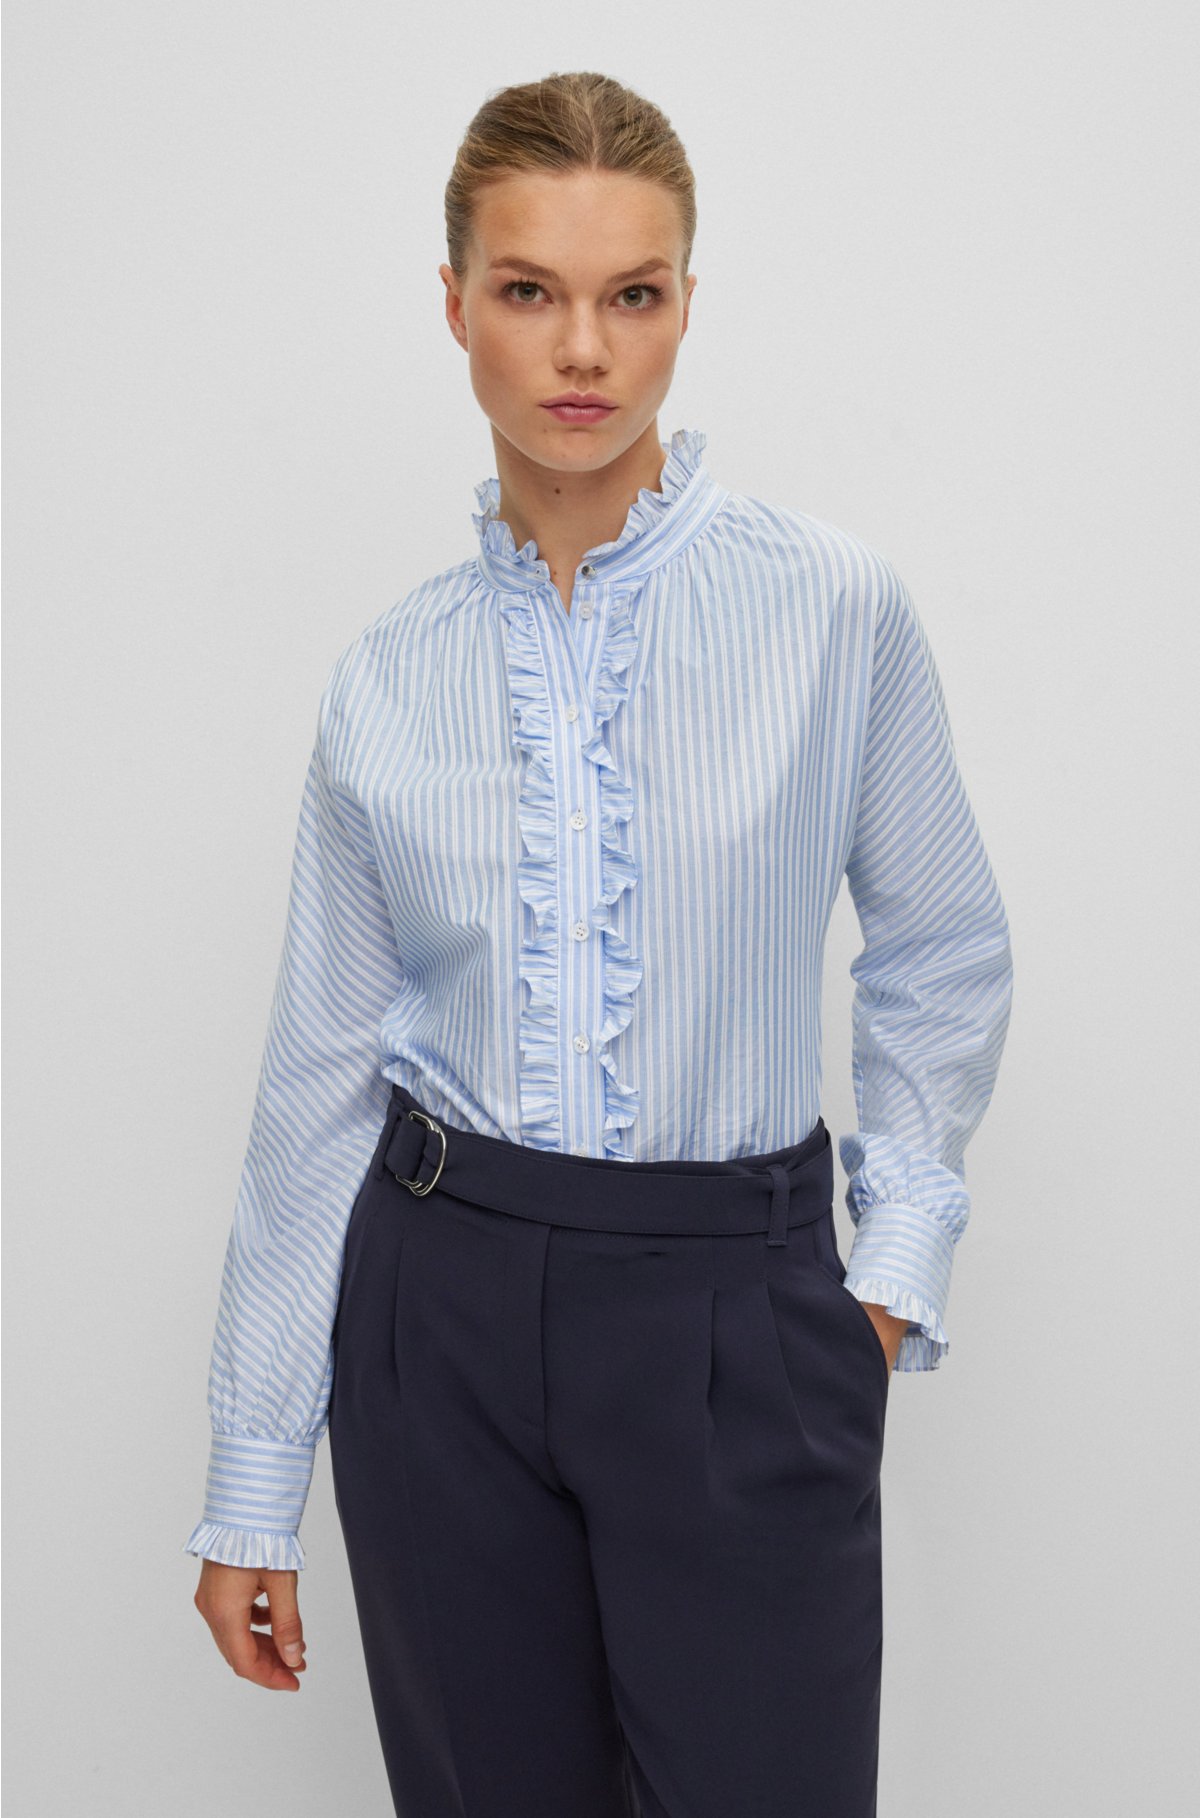 Baffle ik heb het gevonden Minimaal BOSS - Long-sleeved blouse in pinstripe cotton with frill details